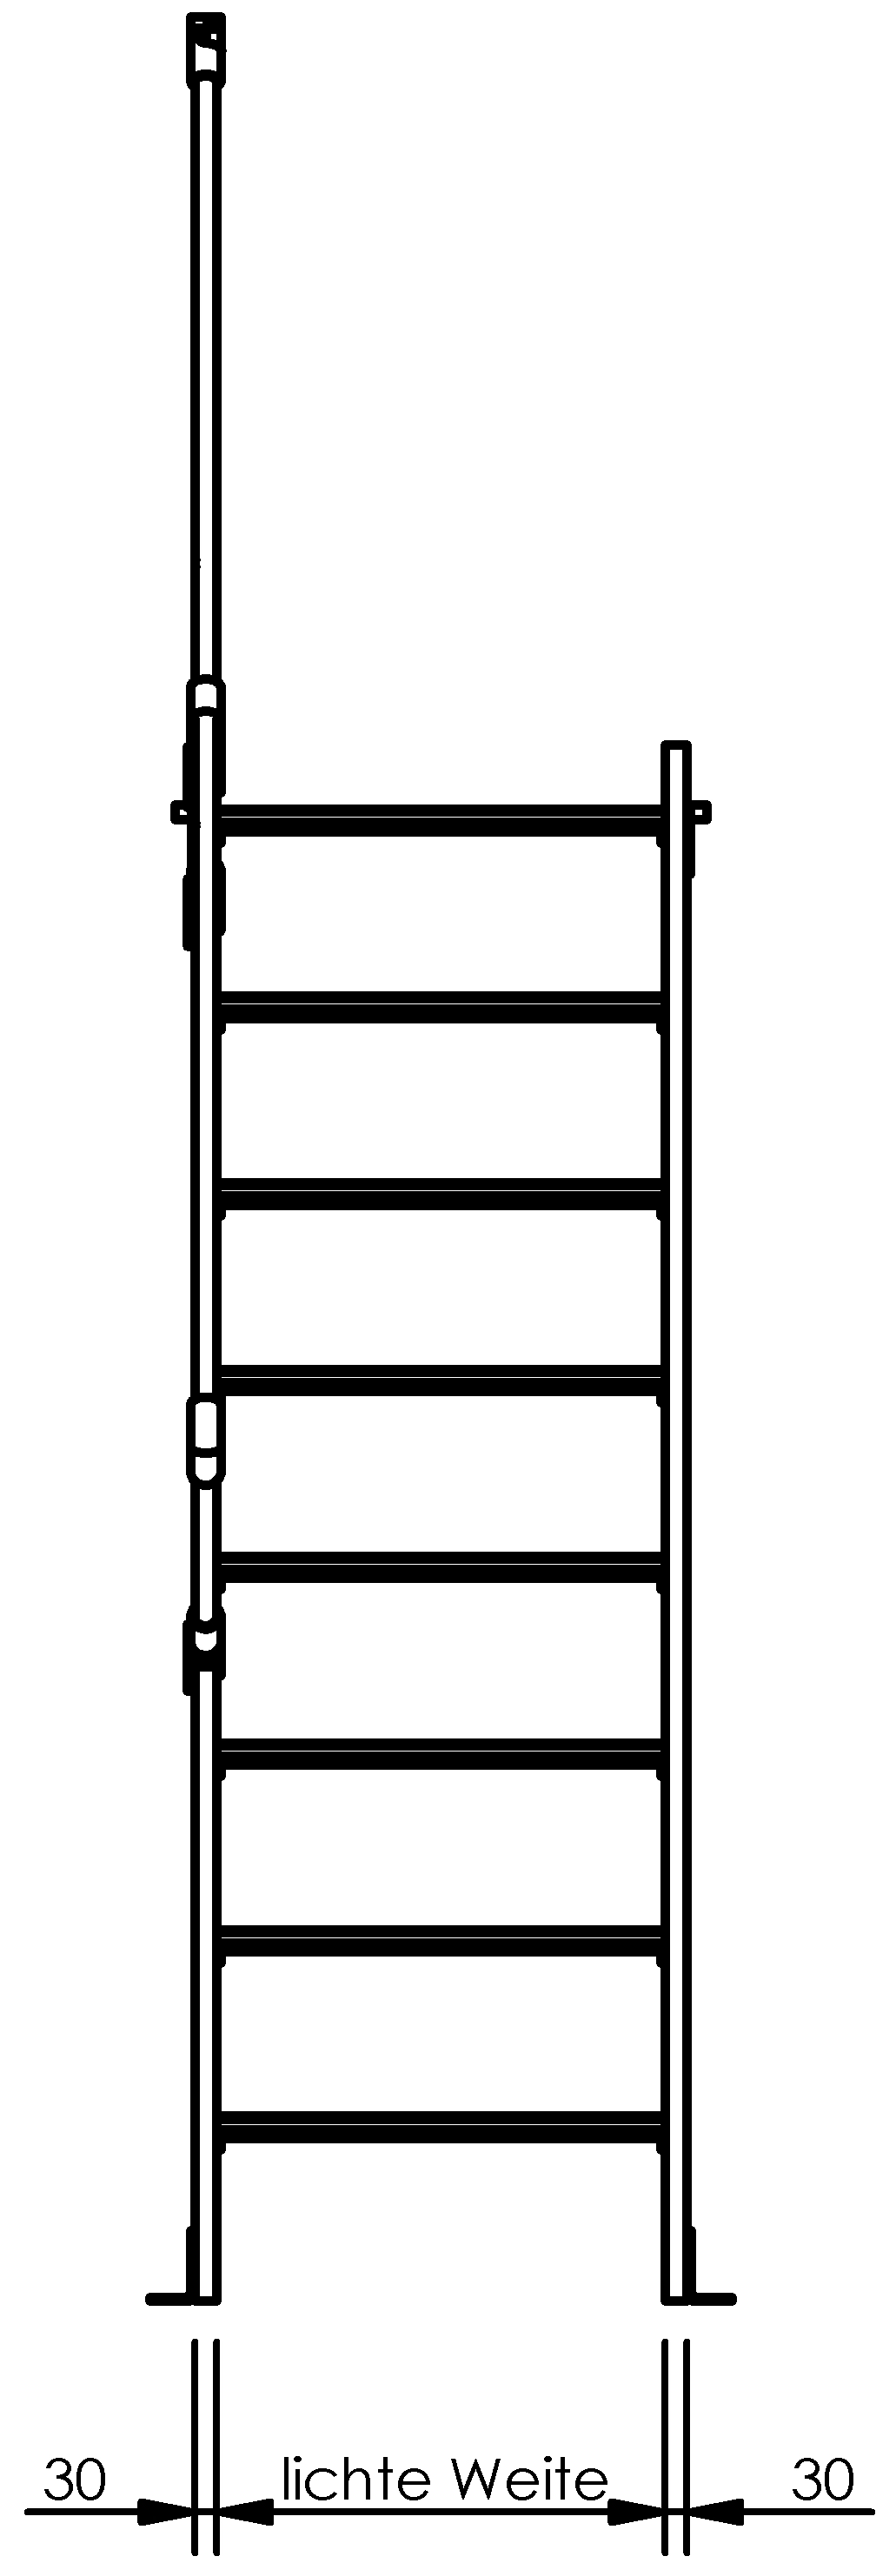 Selbstbautreppen, LW 600mm, Stufen aus Alu, Neigung 45°